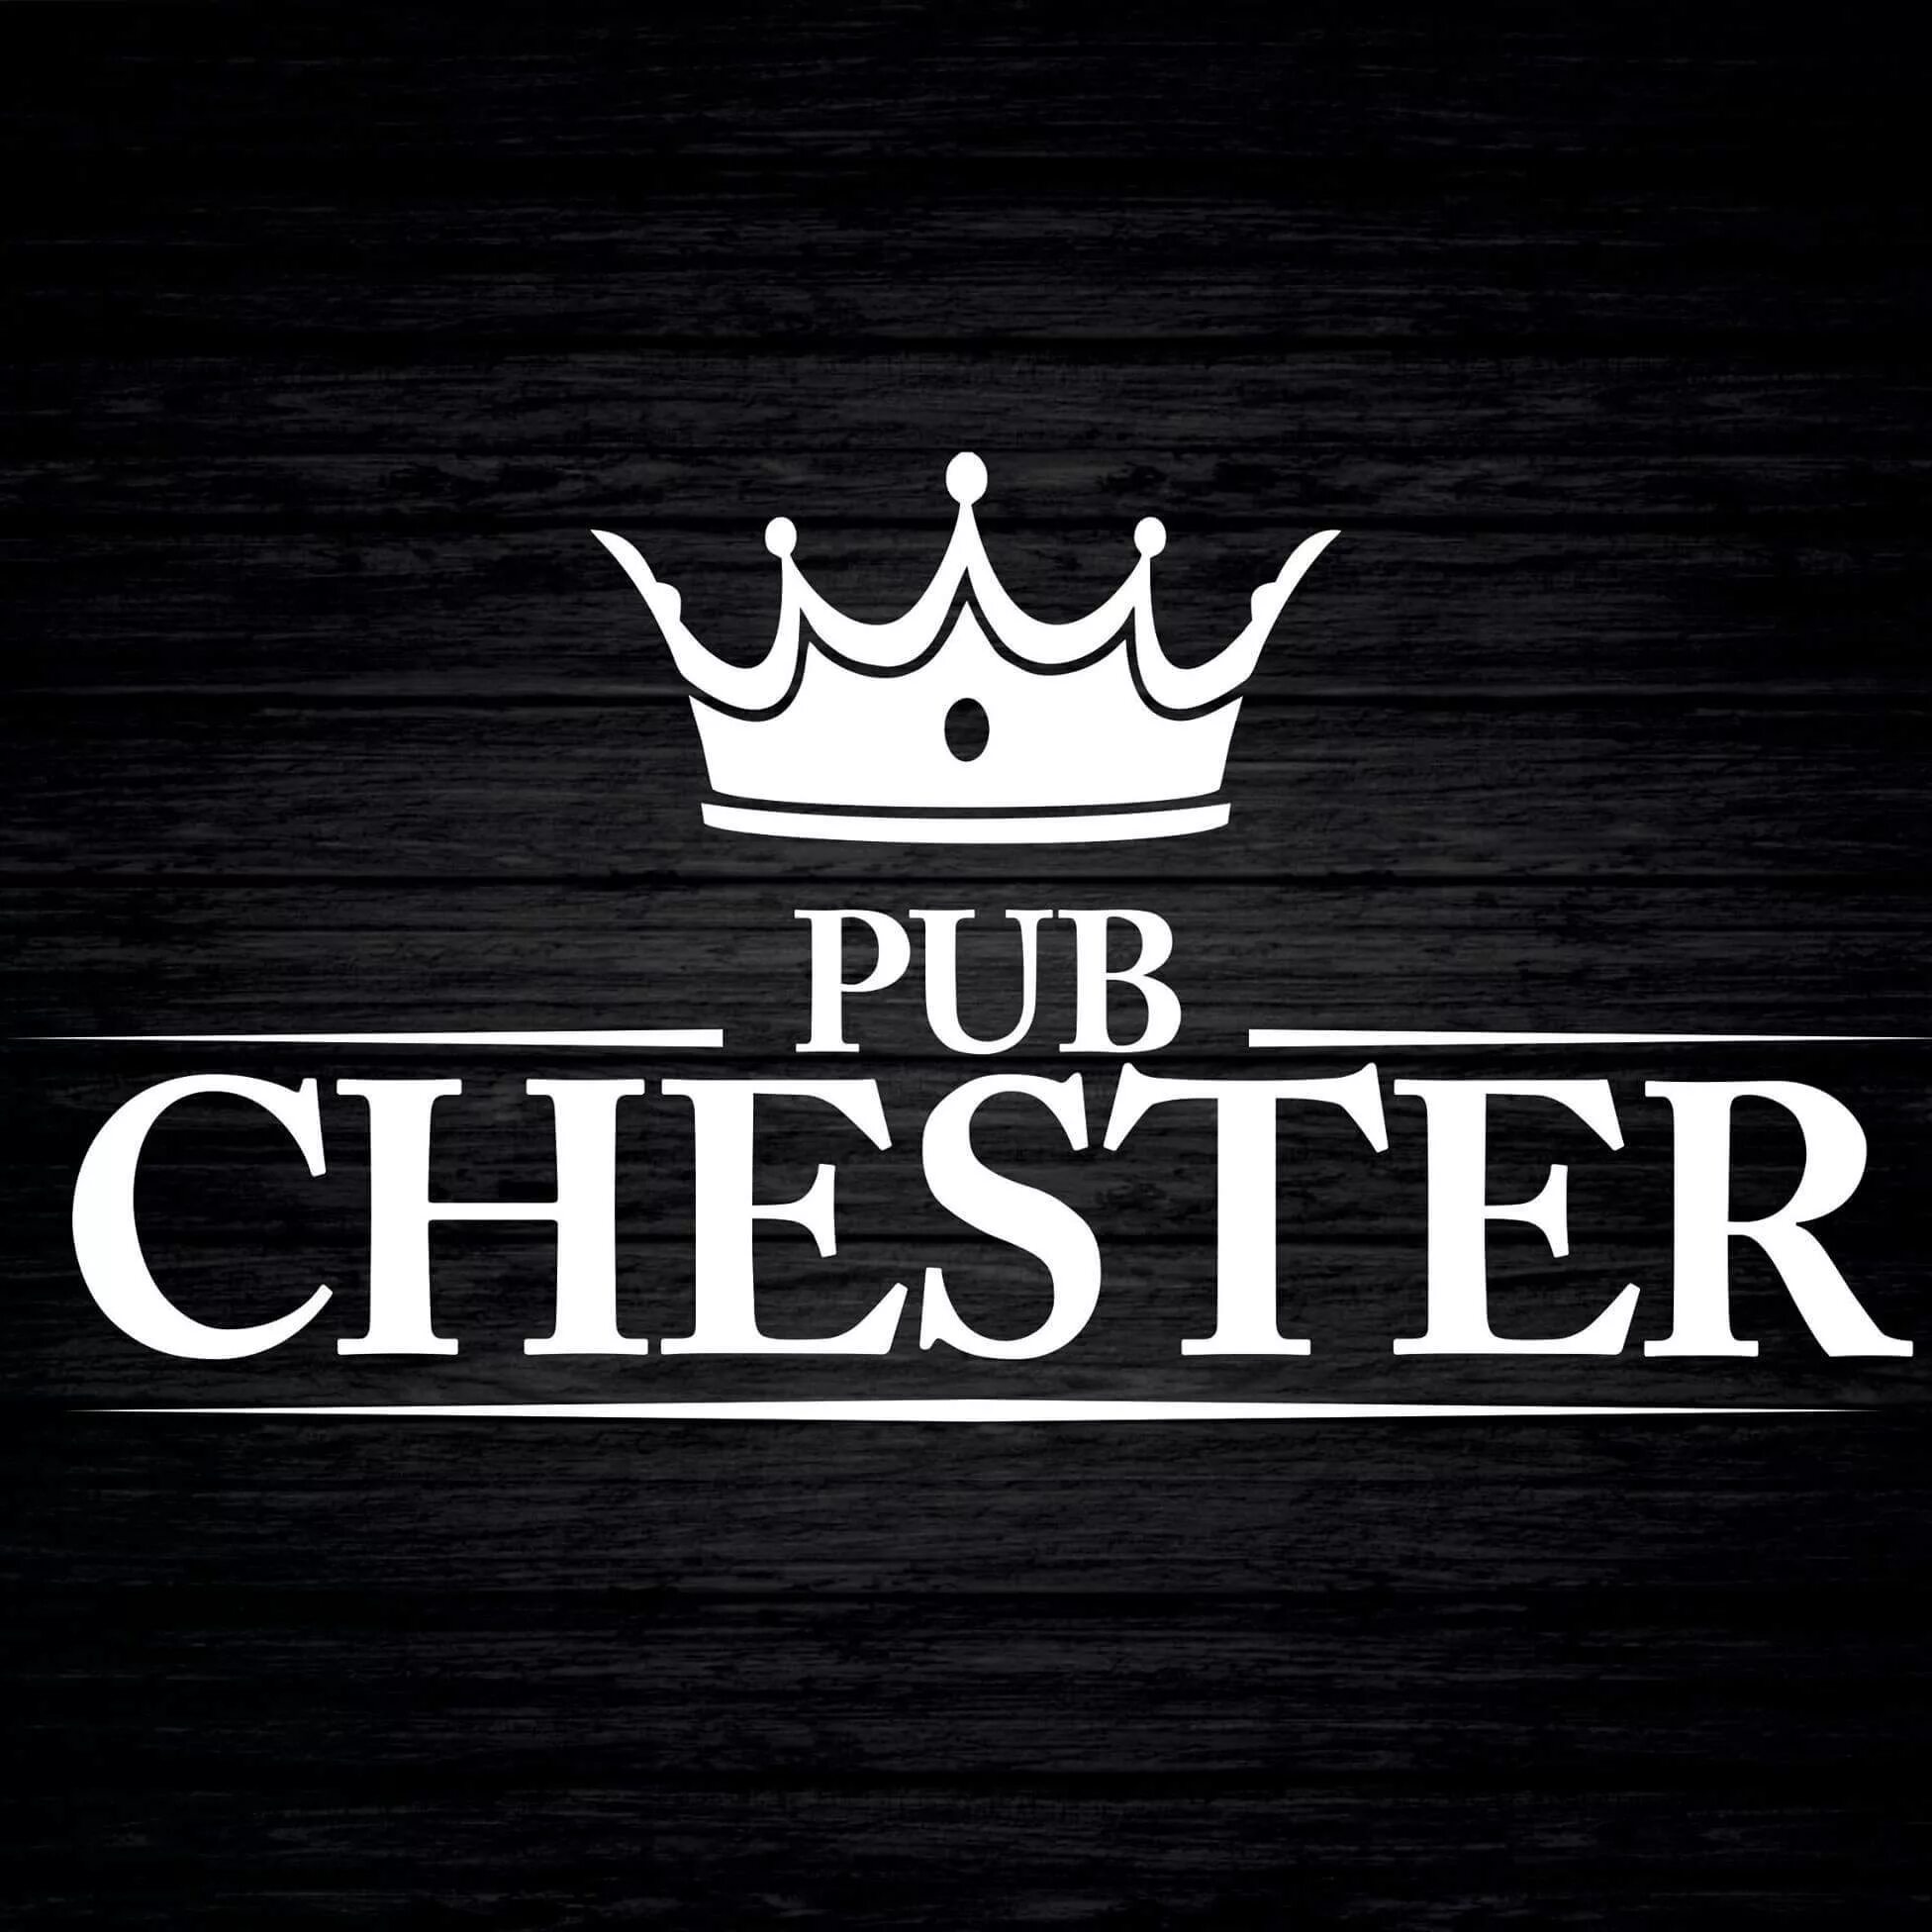 Bongacams chester. Chester логотип. Честер надпись. Честер обувь логотип. Честер паб.